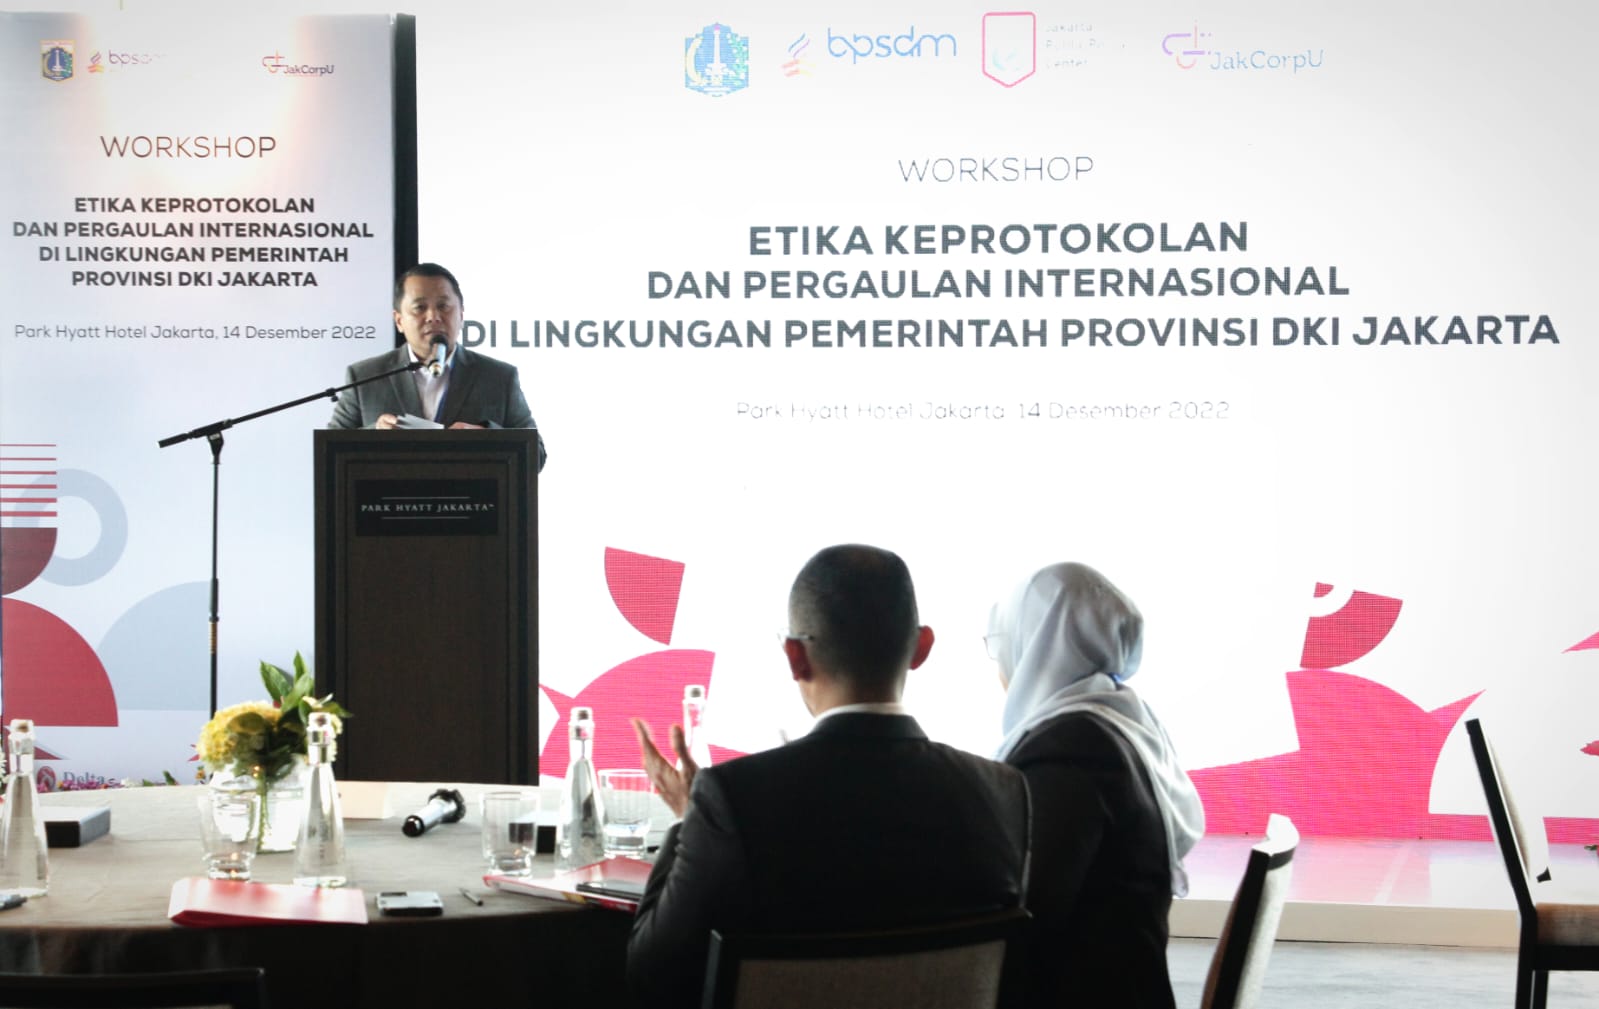 Workshop Etika Keprotokolan dan Pergaulan International di LingkunganPemerintah Provinsi DKI Jakarta